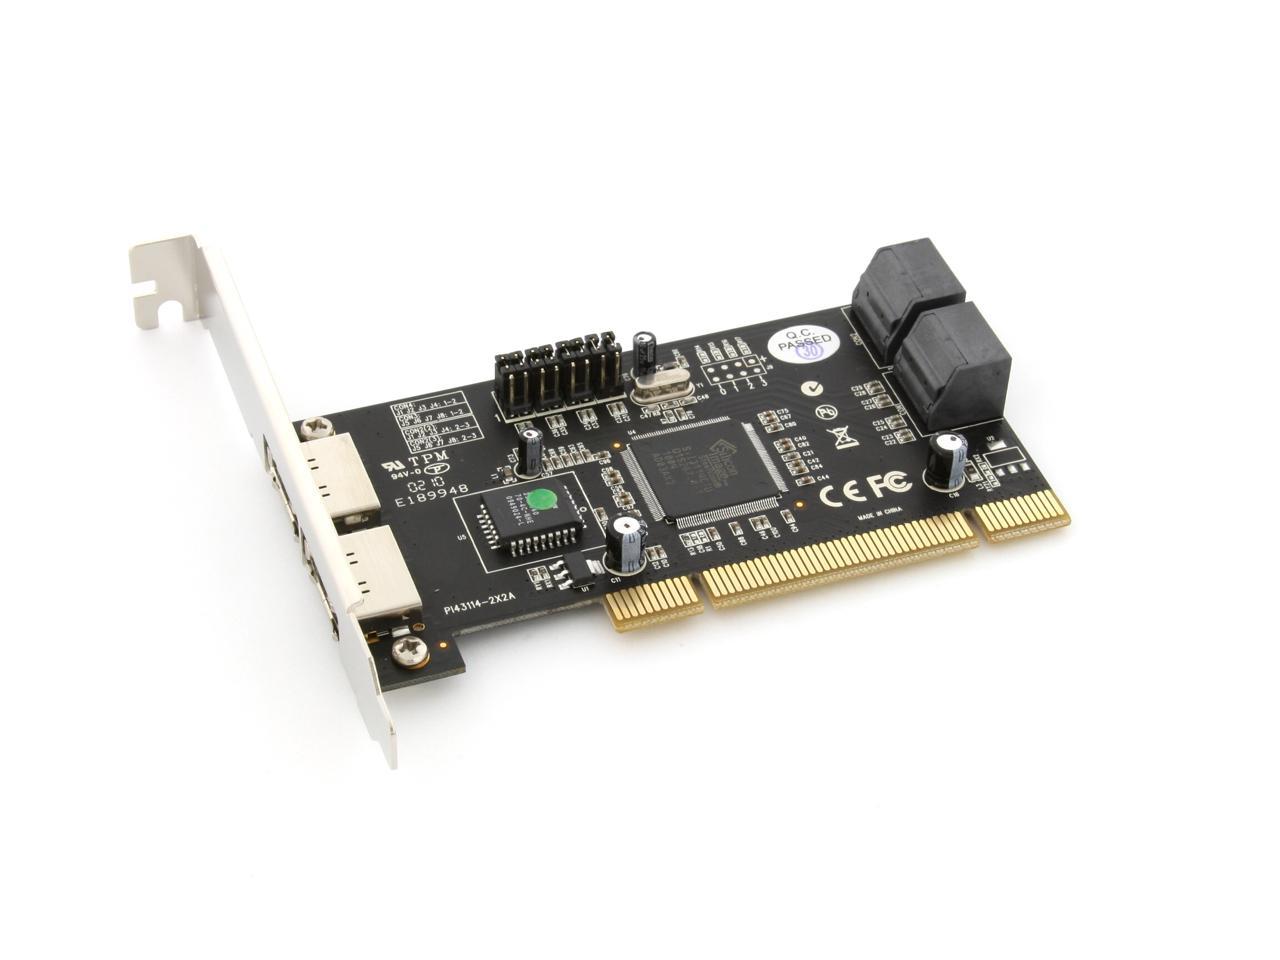 Vantec UGT-ST310R 6-Port SATA II 150 PCI Host Card With RAID